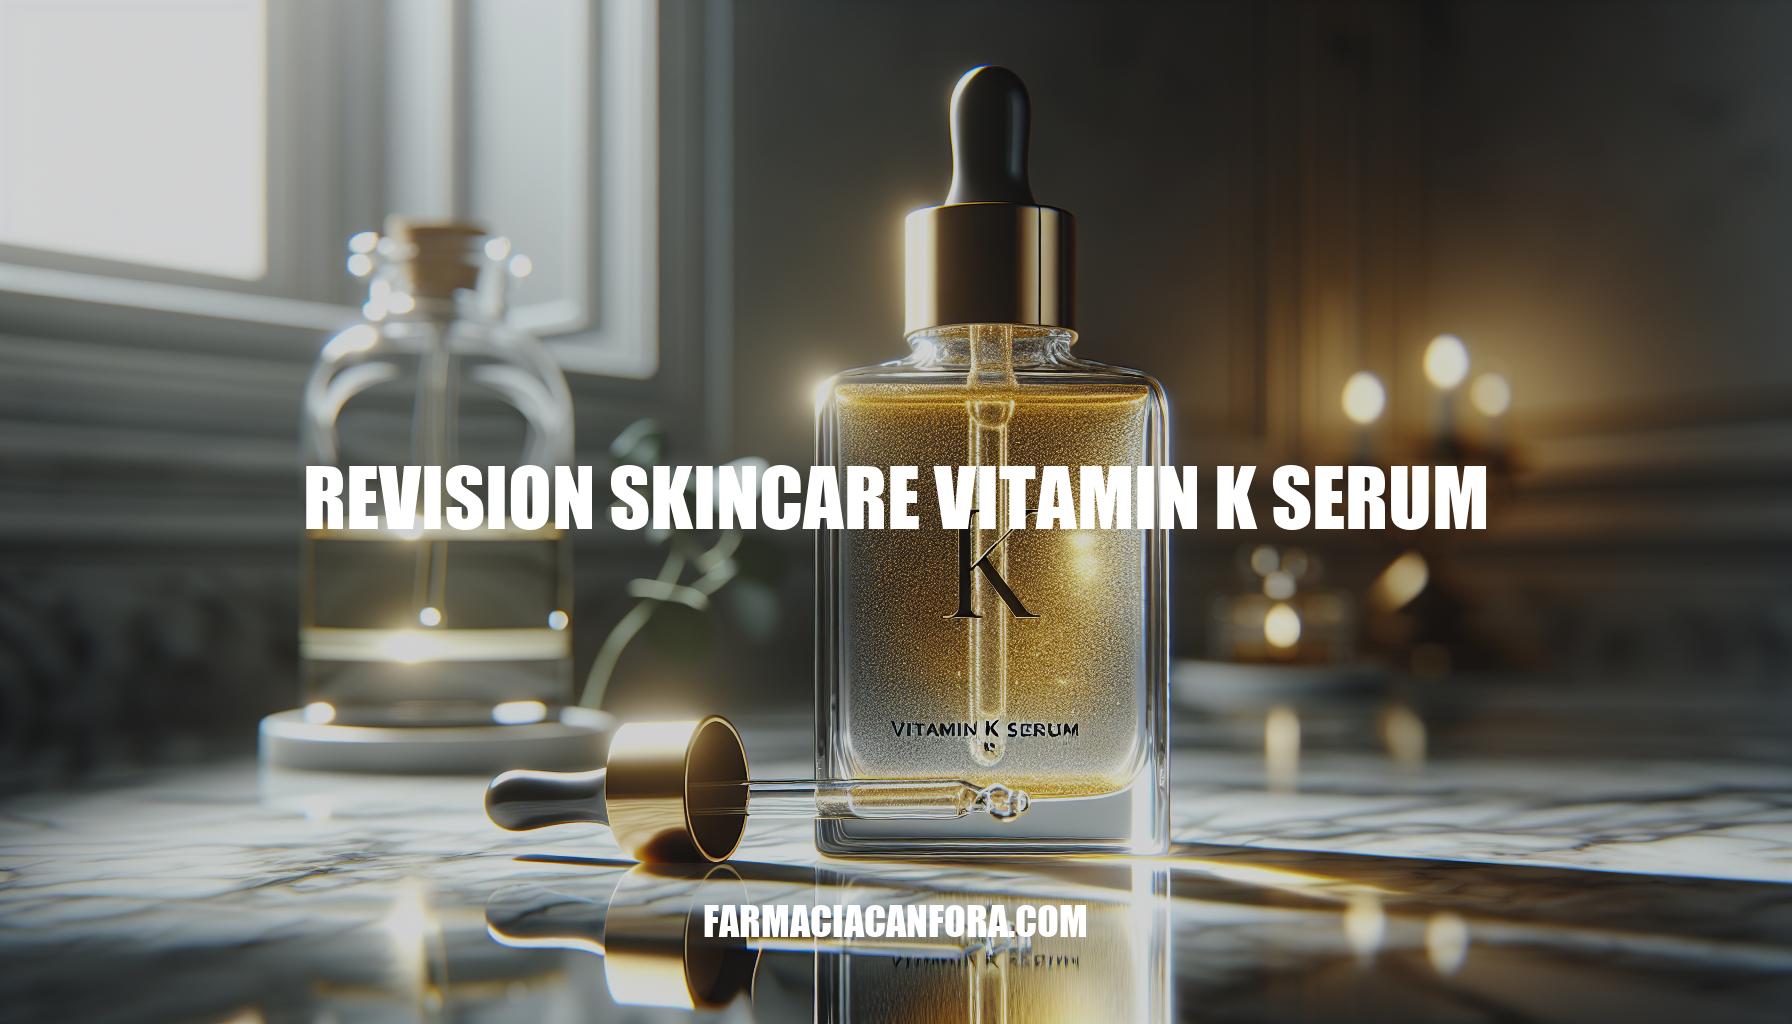 Rejuvenate Your Skin with Revision Skincare Vitamin K Serum